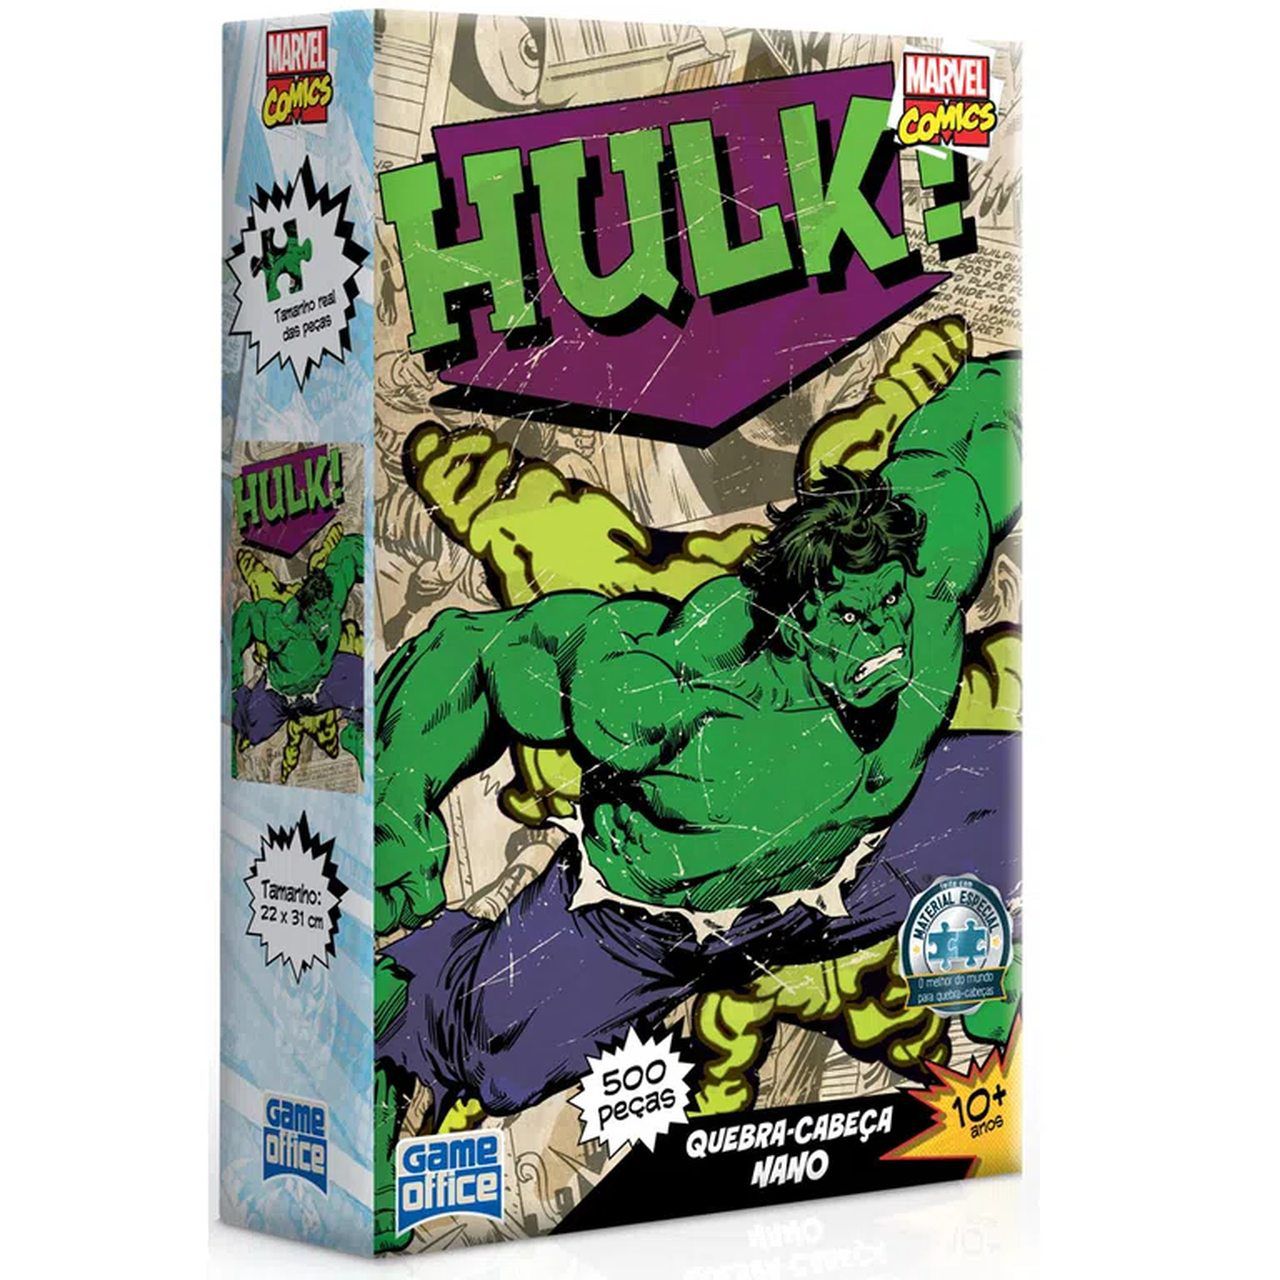 Quebra-Cabeça Hulk: Marvel Comics - Game Office